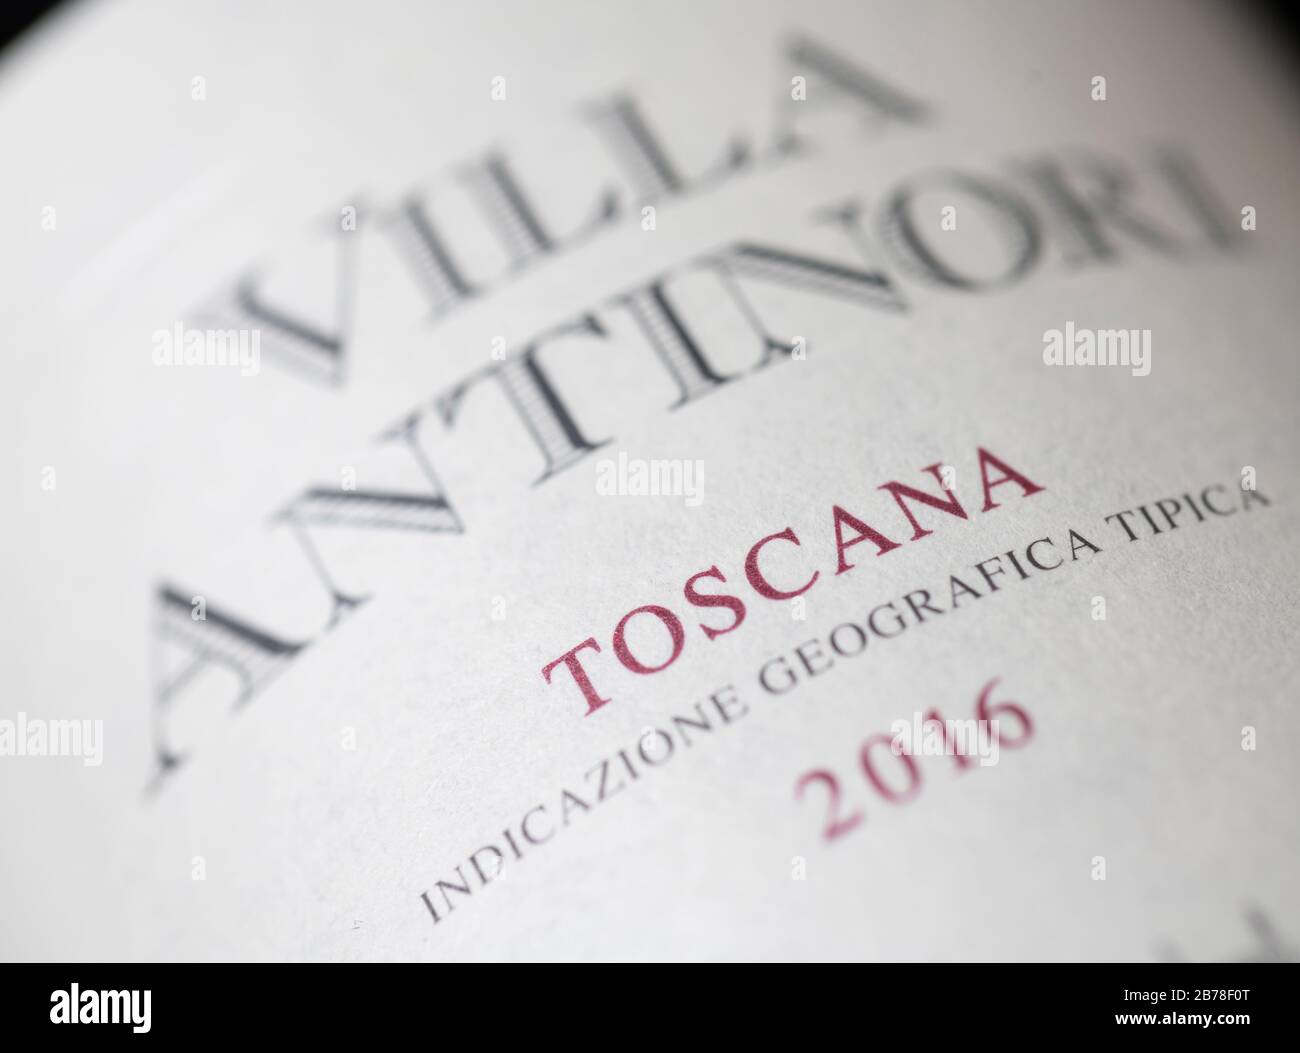 2016 Villa Antinori label de vin rouge italien closeup Banque D'Images